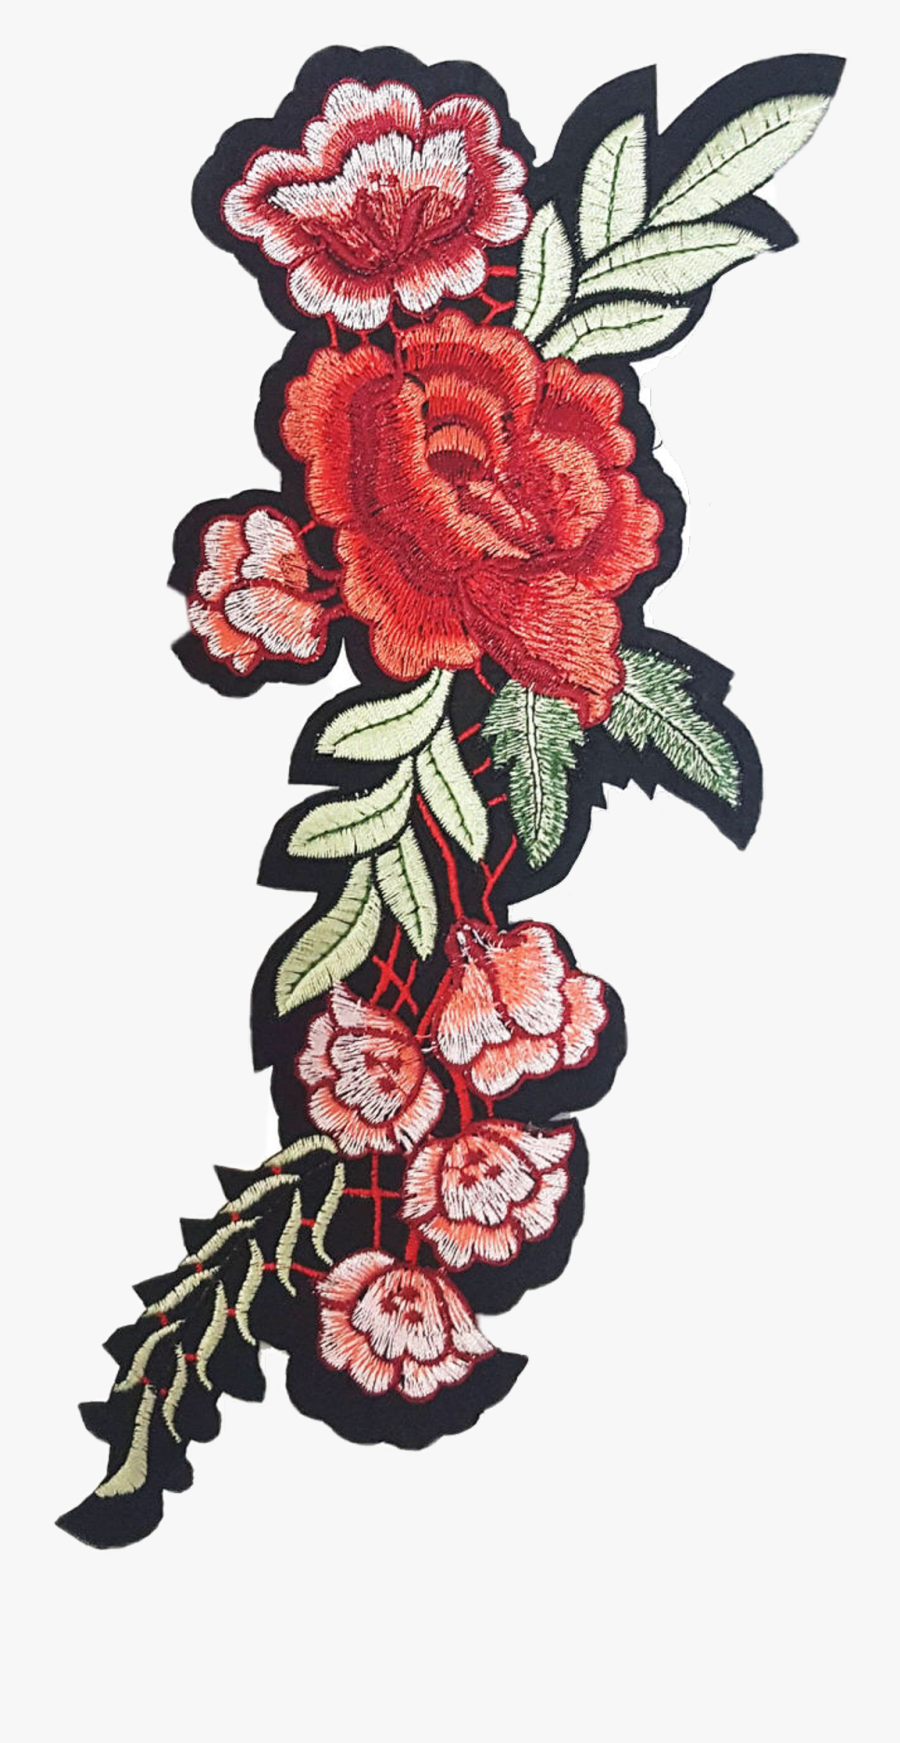 gucci rose logo